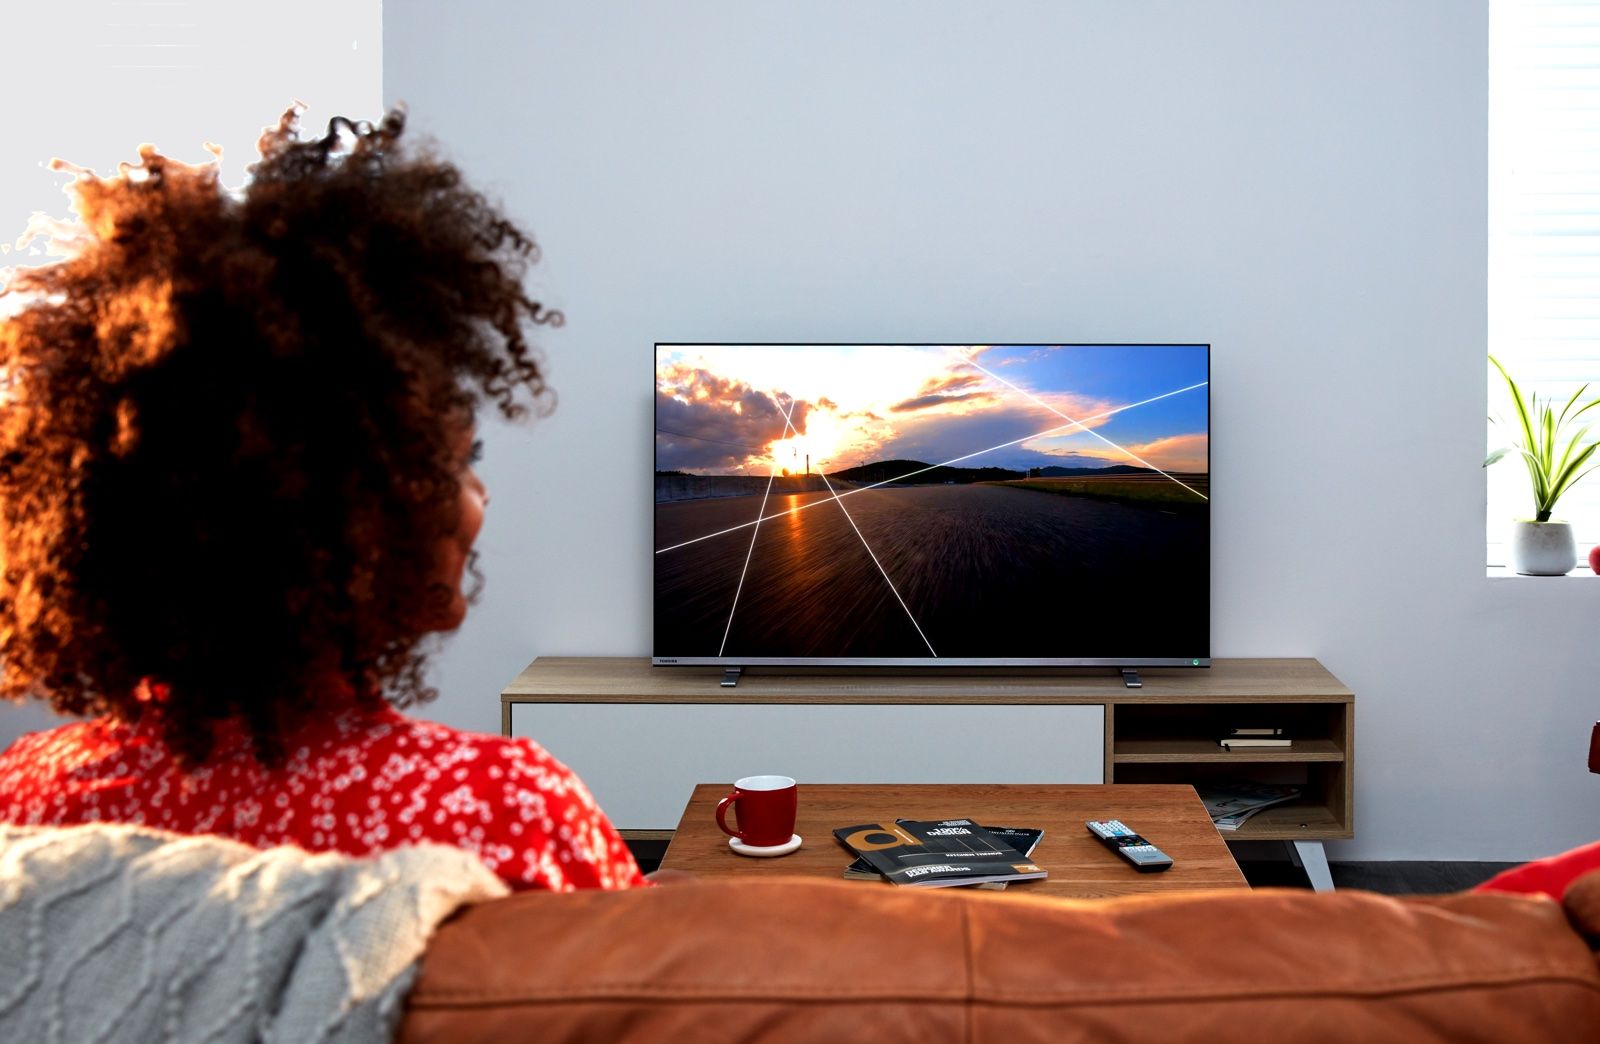 Toshiba's new range-topping UK4B 4K HDR TV comes with hands-free Amazon Alexa photo 1